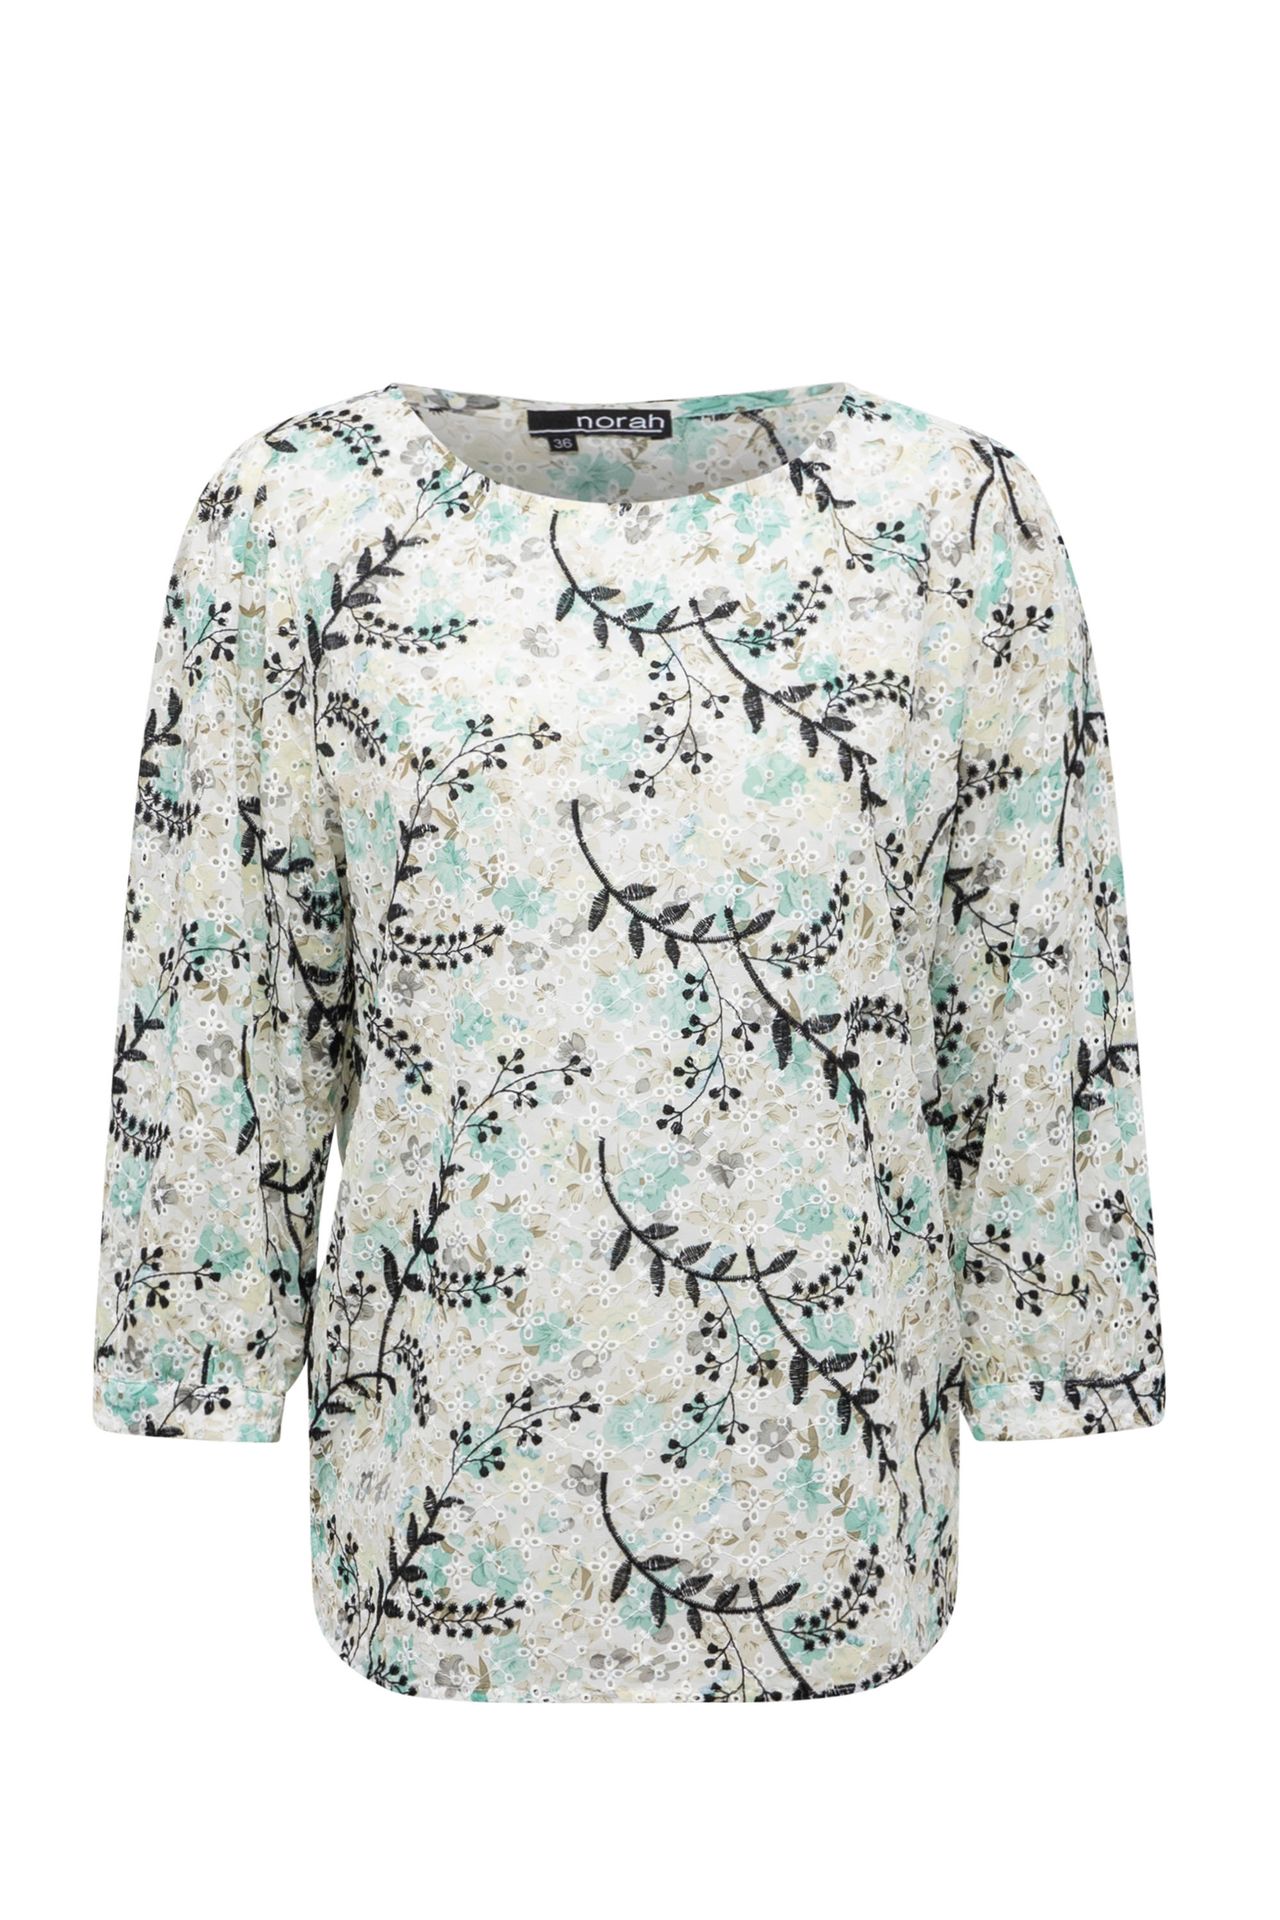 Norah Meerkleurige blouse multicolor 213426-002